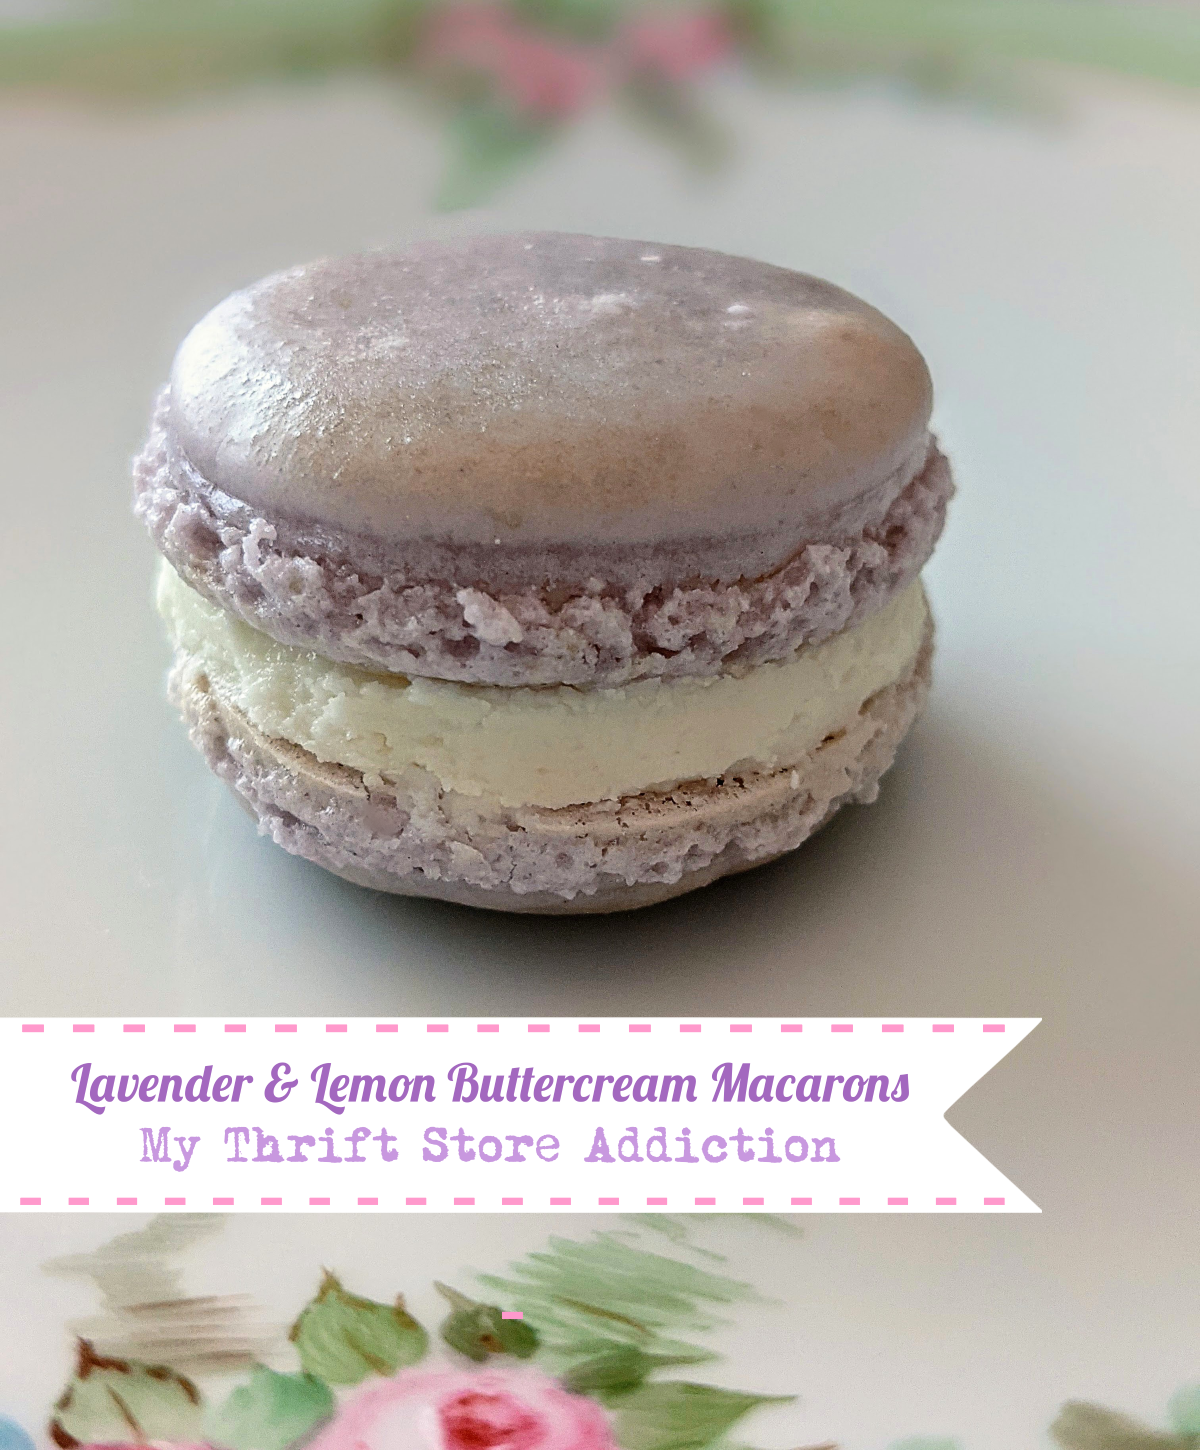 lavender macarons with lemon buttercream